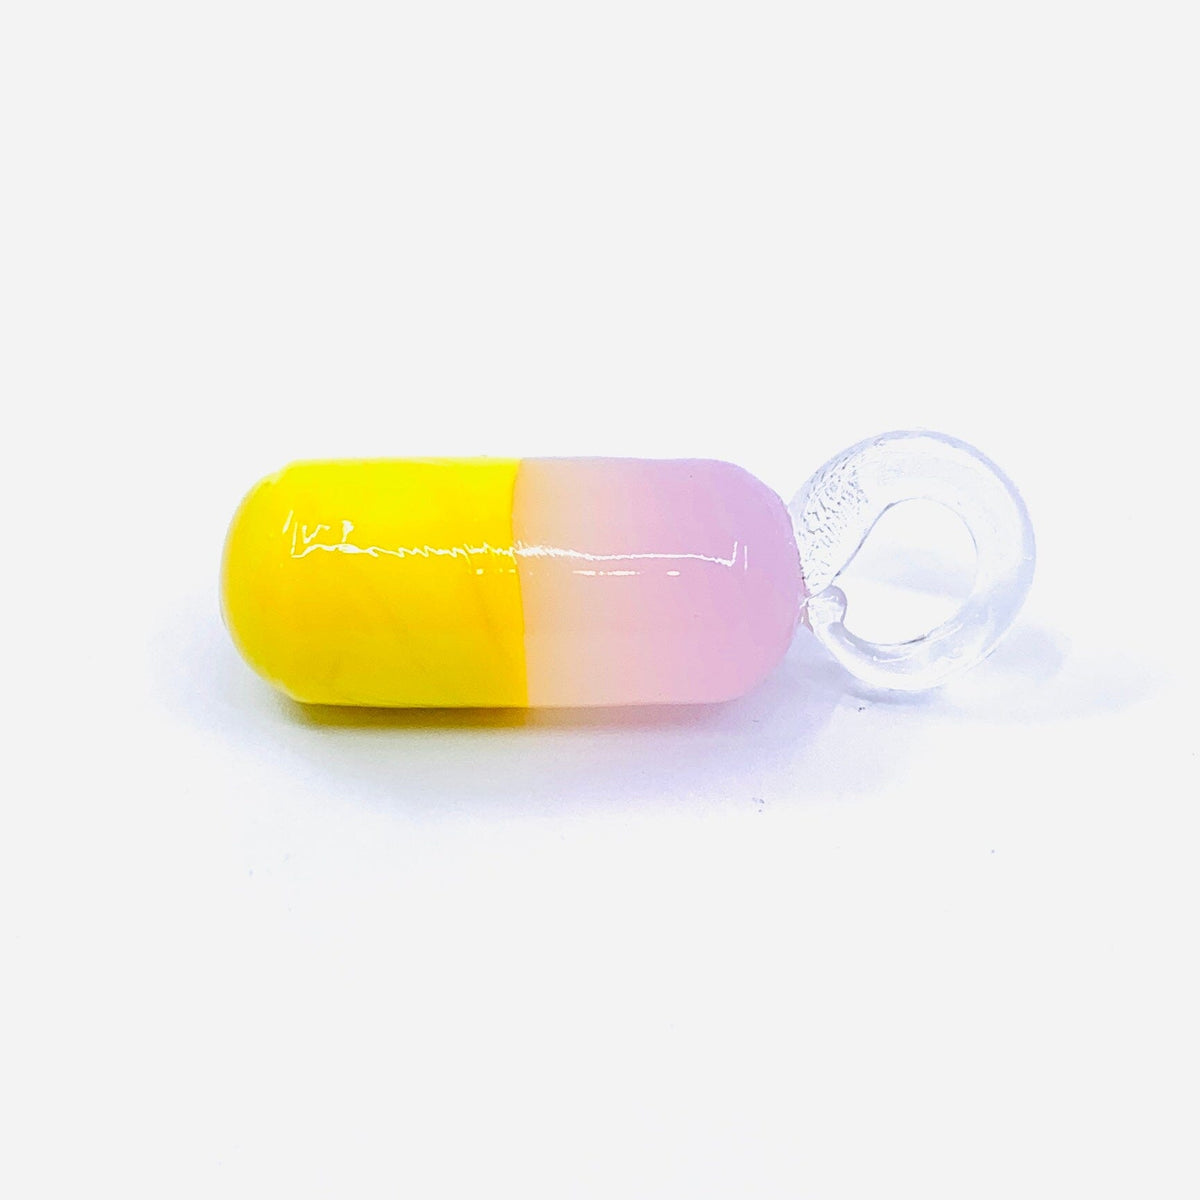 Glass Chill Pill Ornaments/Pendants - Happy Pill 